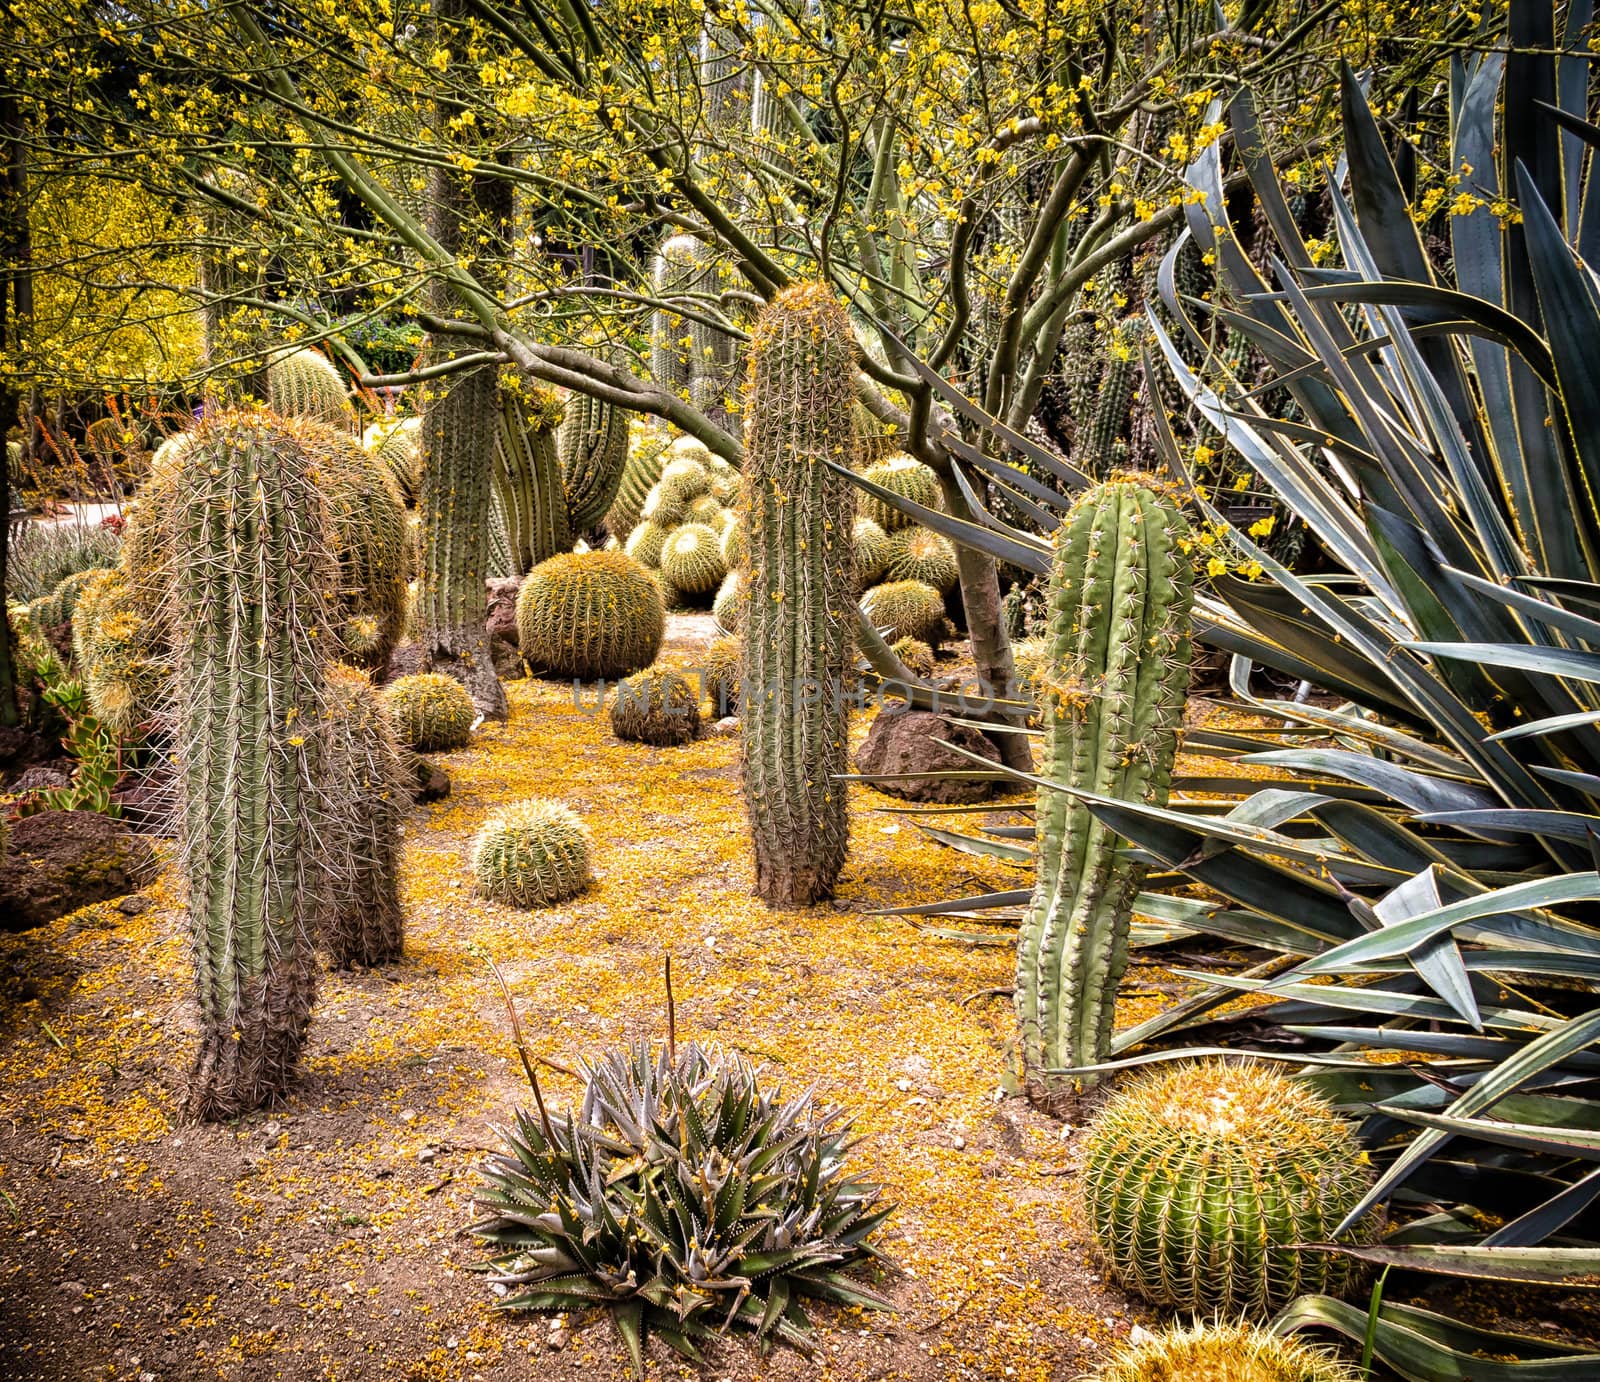 A desert garden of stunning cacti under a yellow blooming tree.